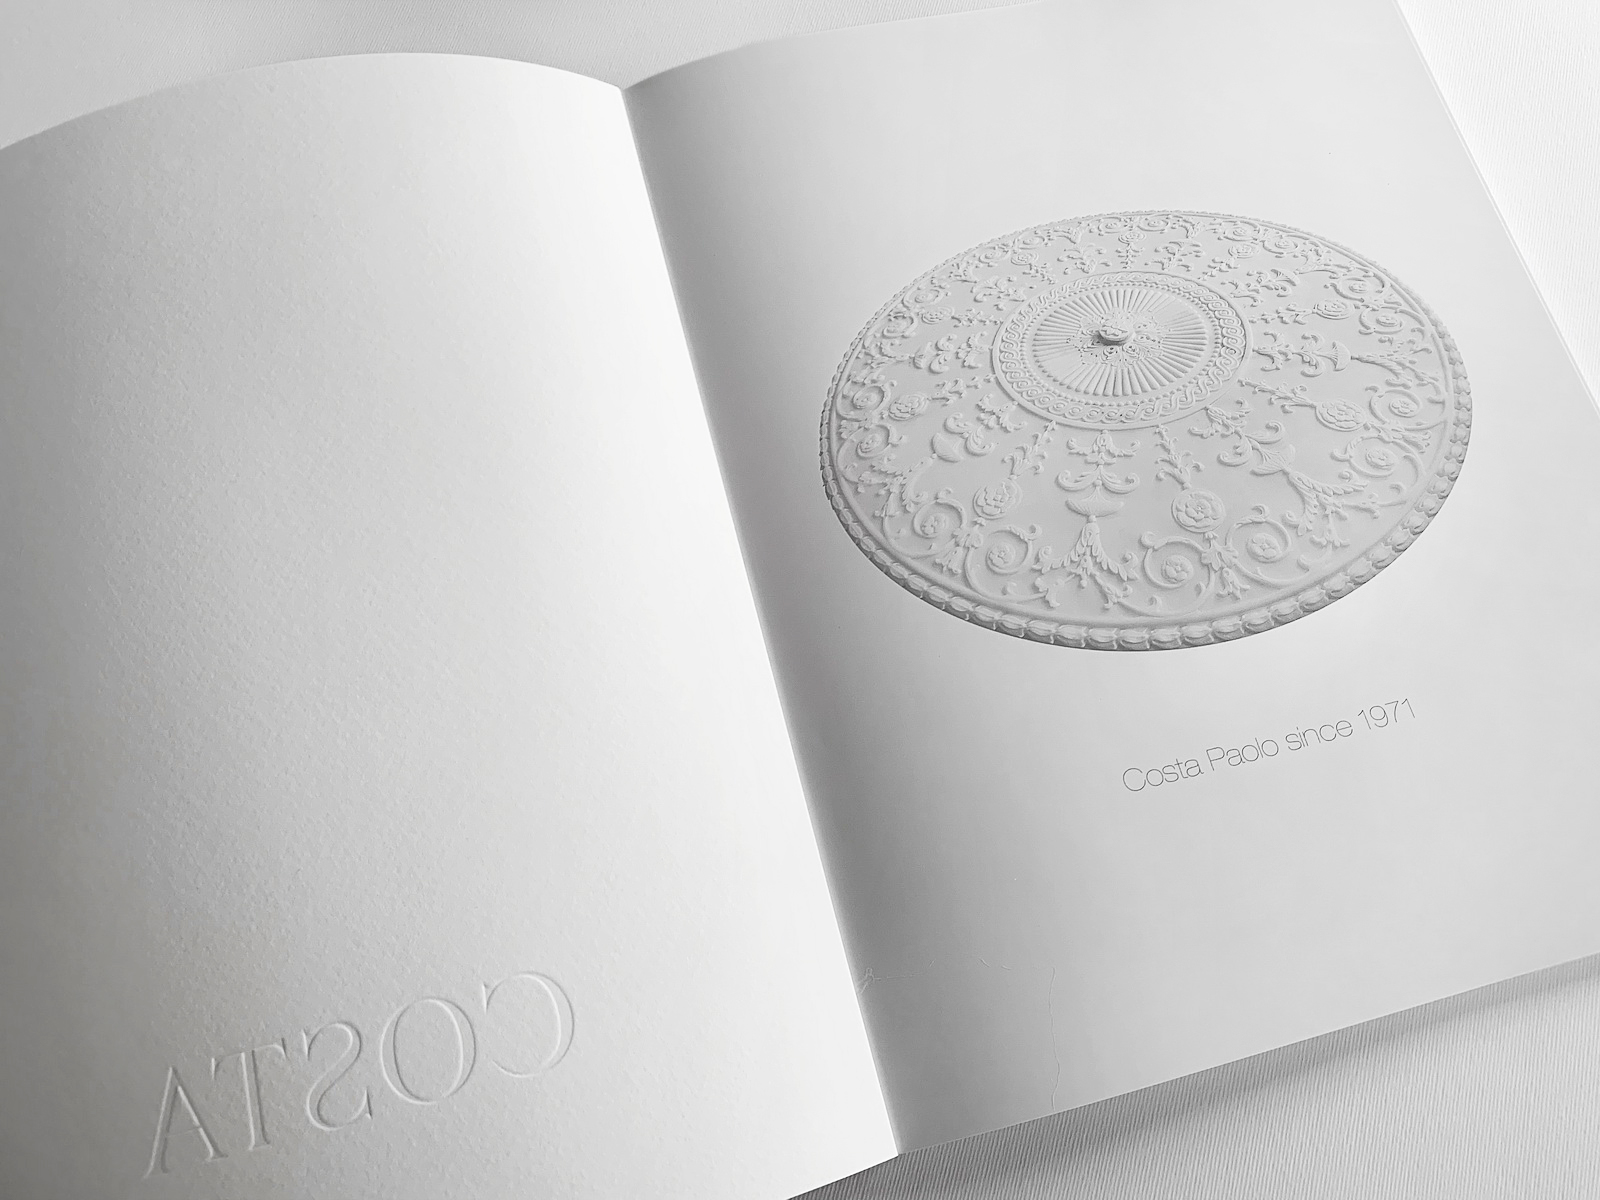 Paolo-Costa-Scultura-Marmi-Carrara-Brochure-2019-003